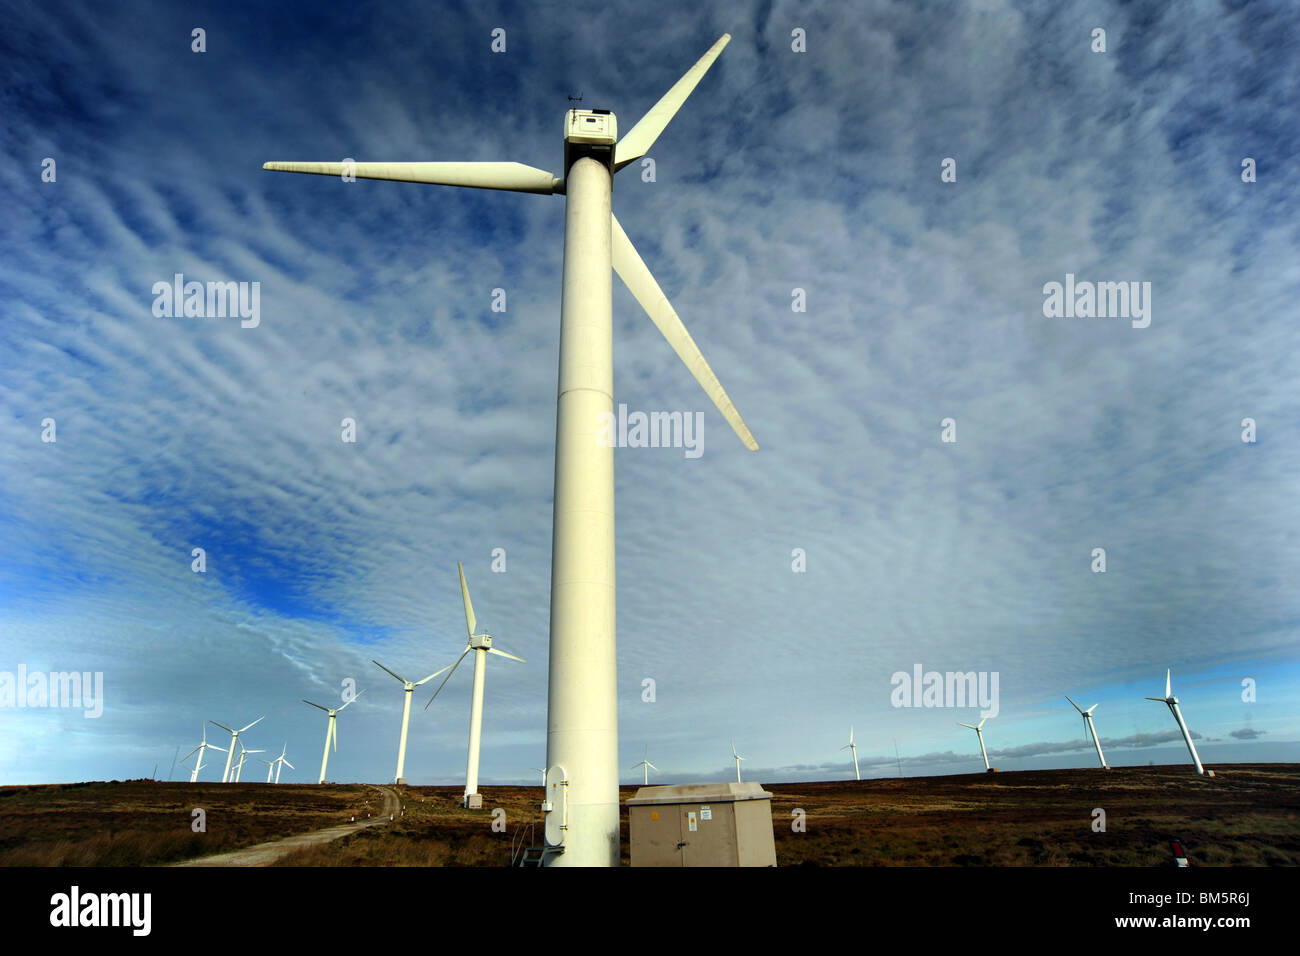 Windfarm turbine against a dramatic blue sky Stock Photo